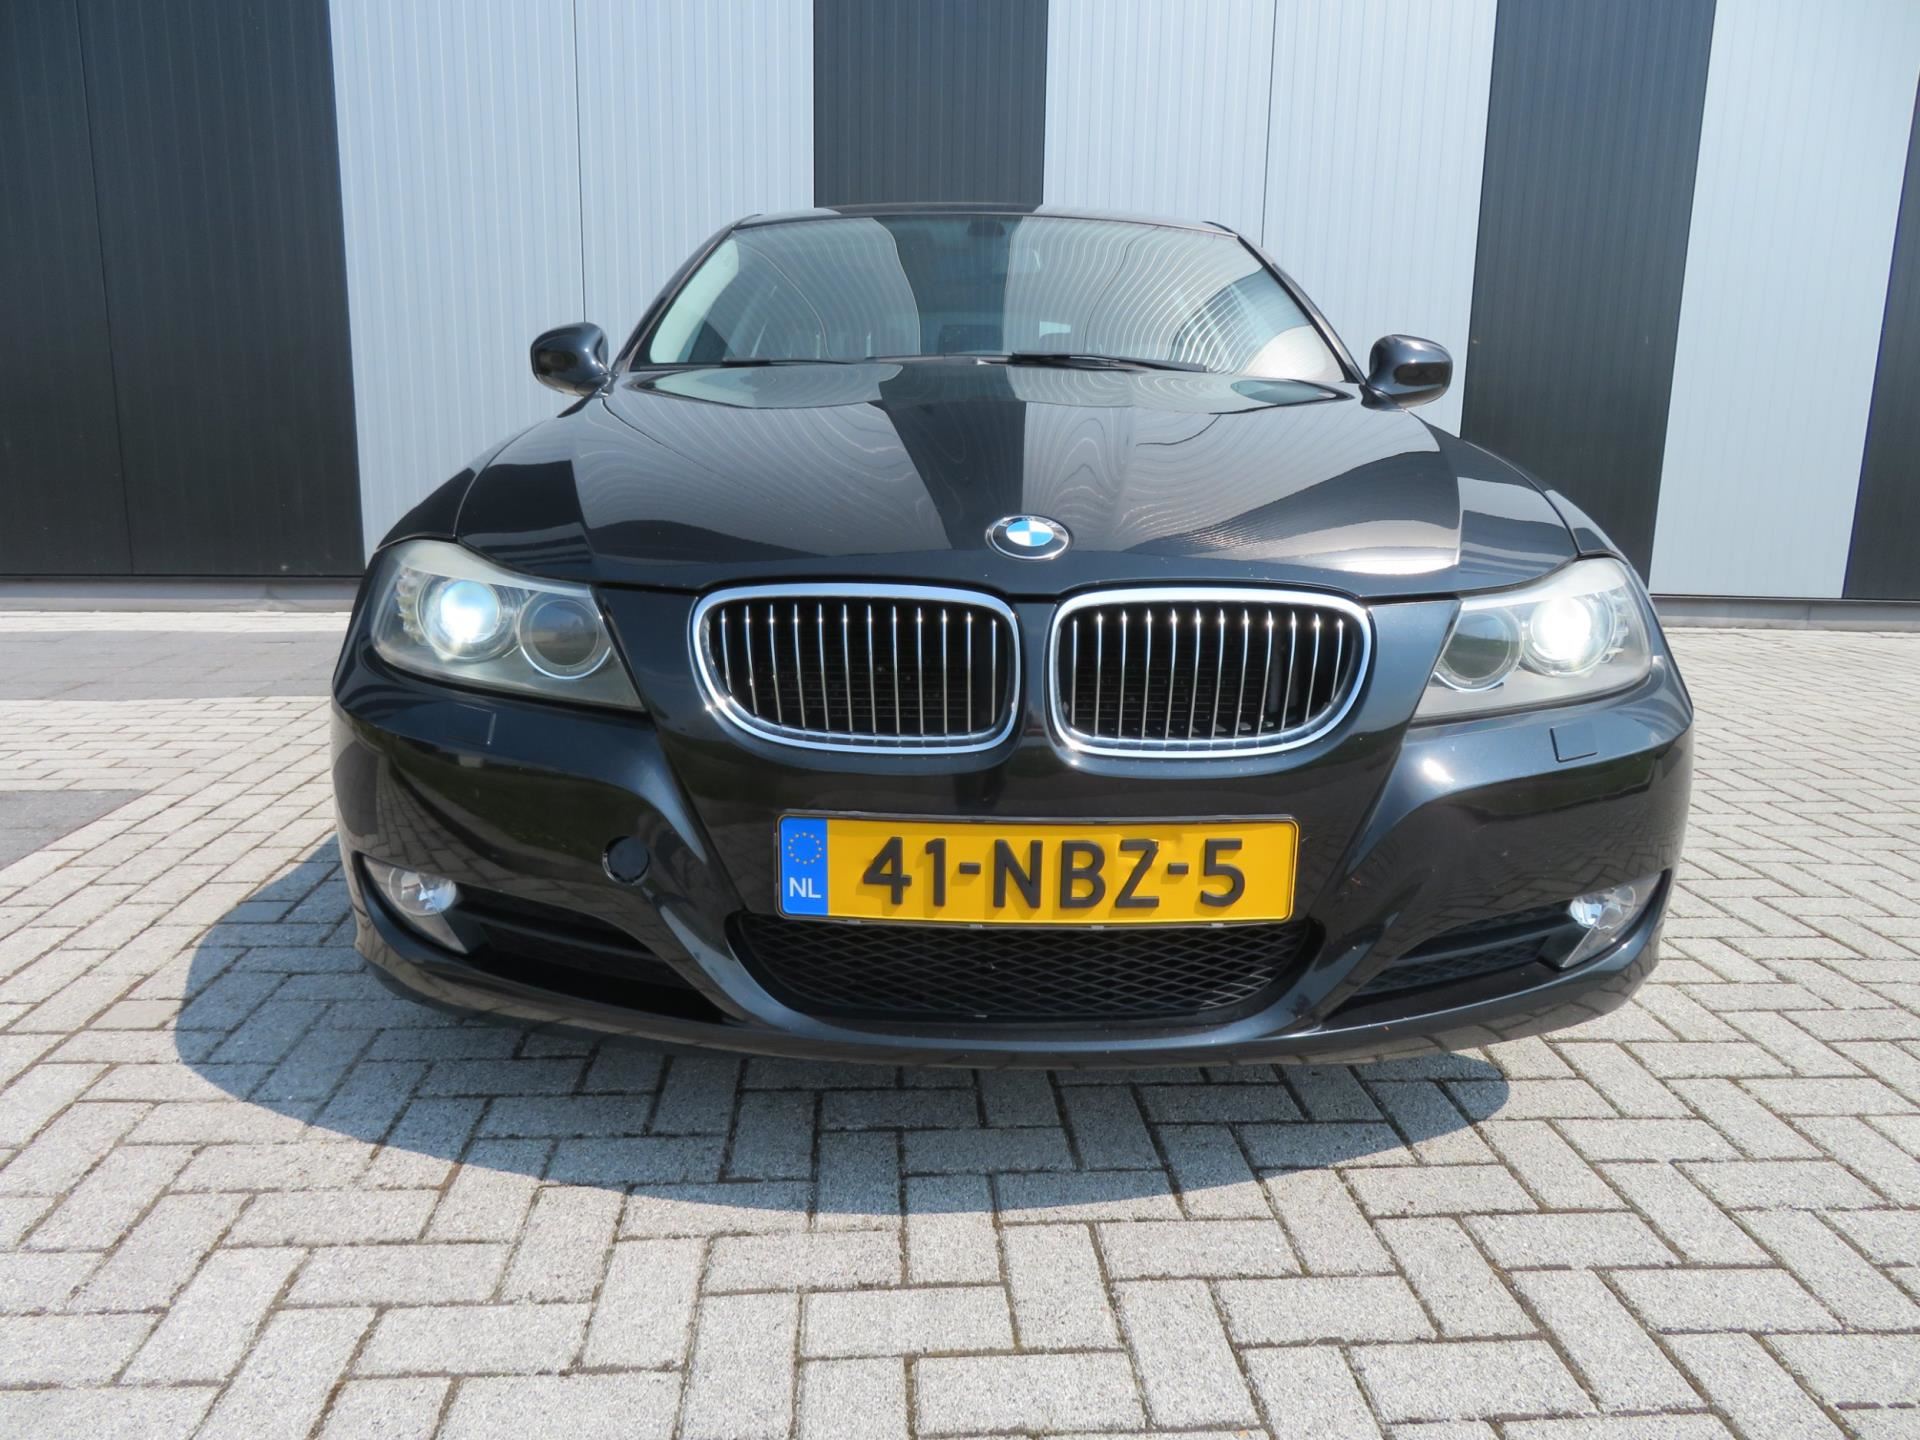 Koning Lear favoriete In hoeveelheid BMW 3-serie Touring - 318i Business Line Benzine uit 2010 - www.fr-cars.nl